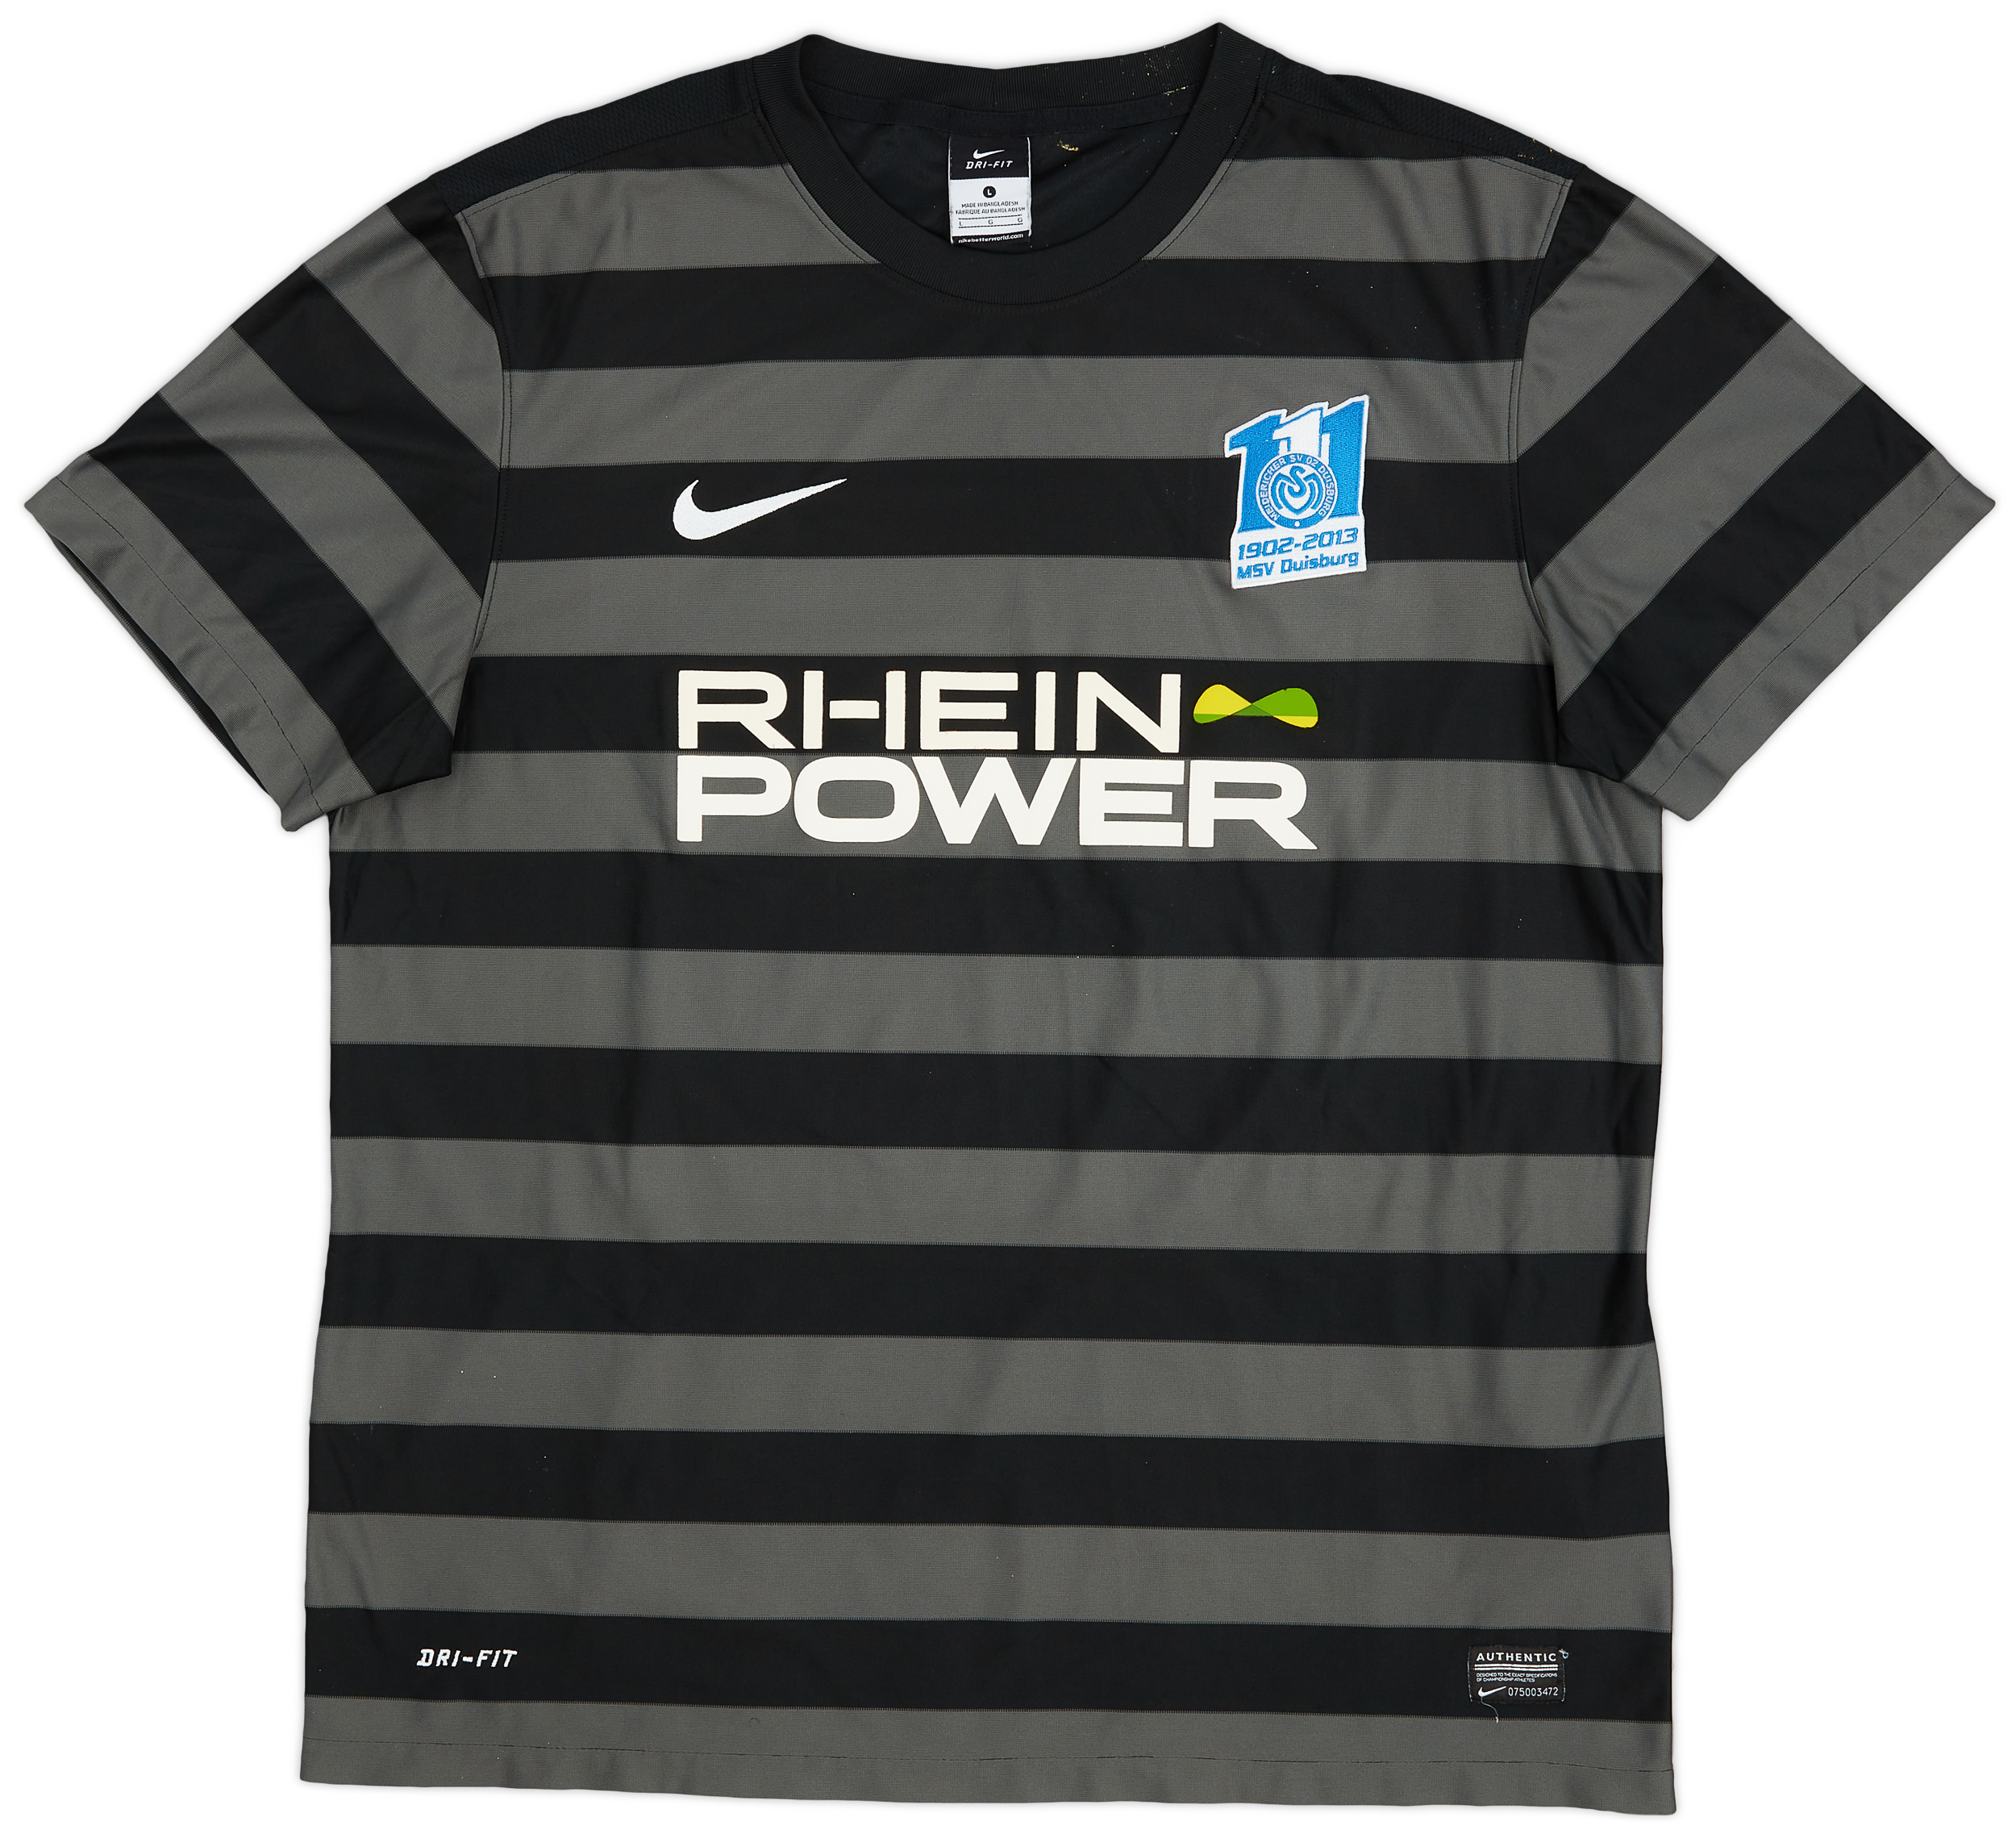 Retro MSV Duisburg Shirt